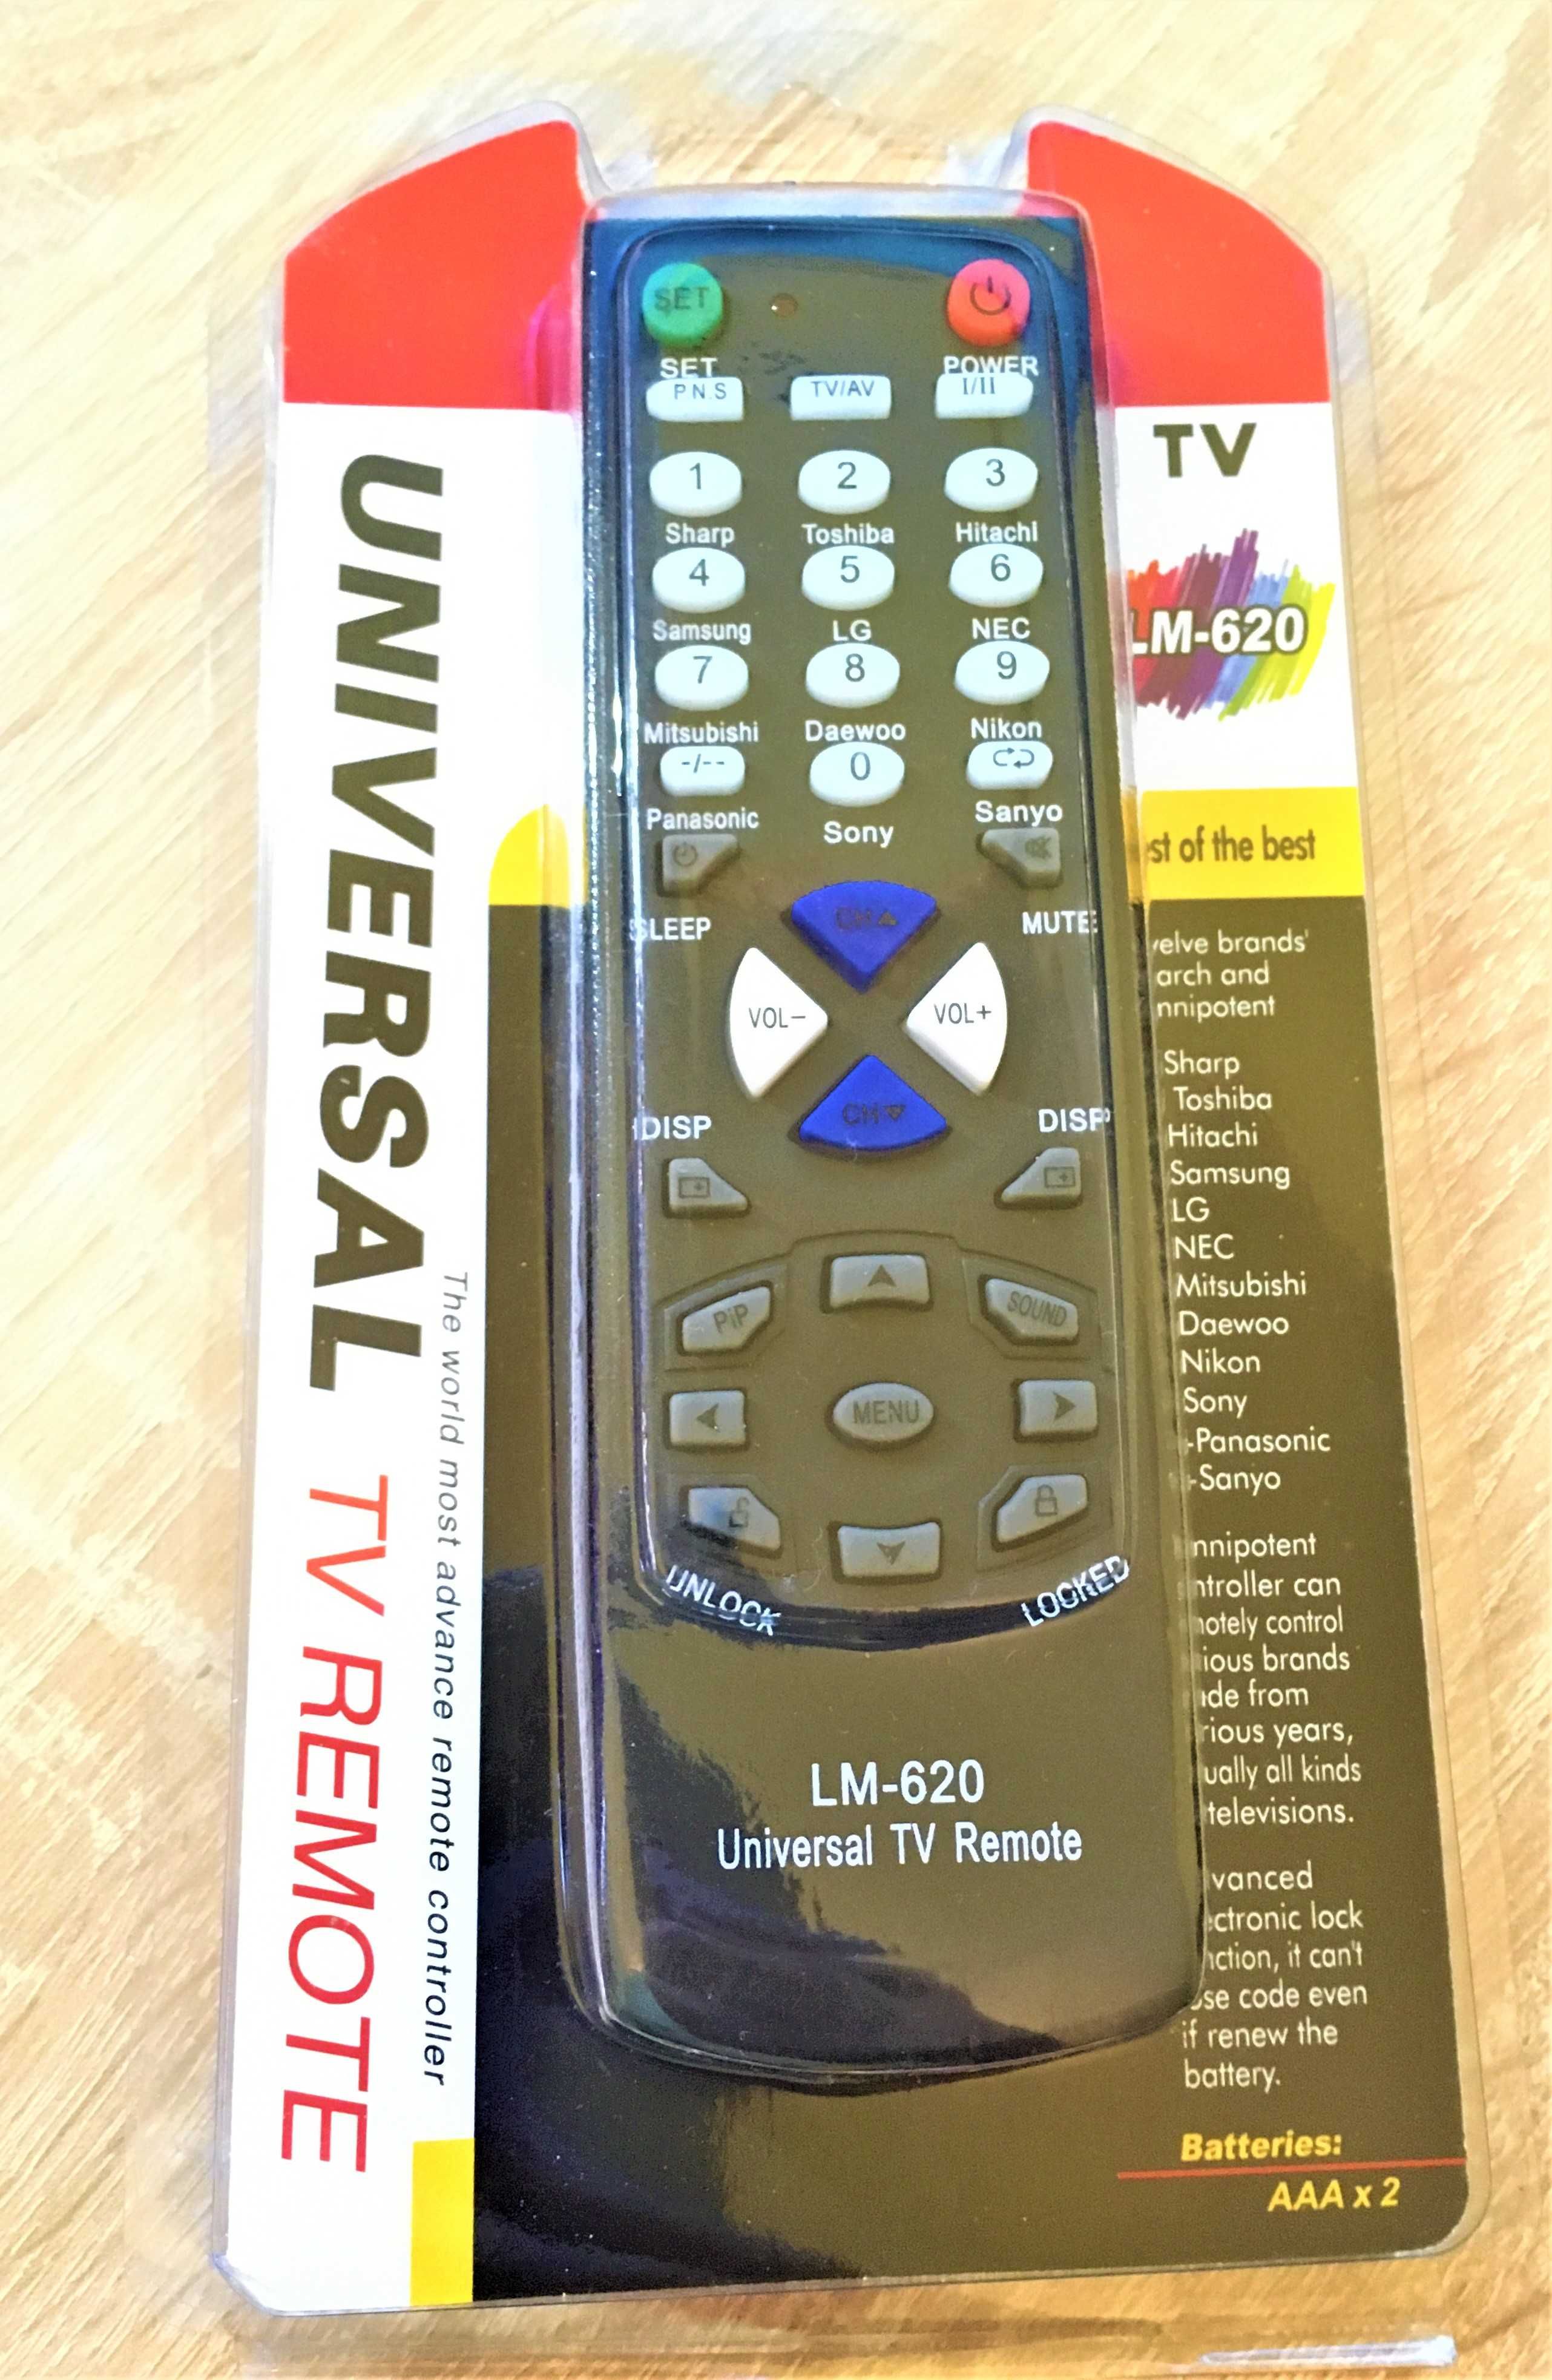 telecomanda universala pentru televizor, ST-620, neagra